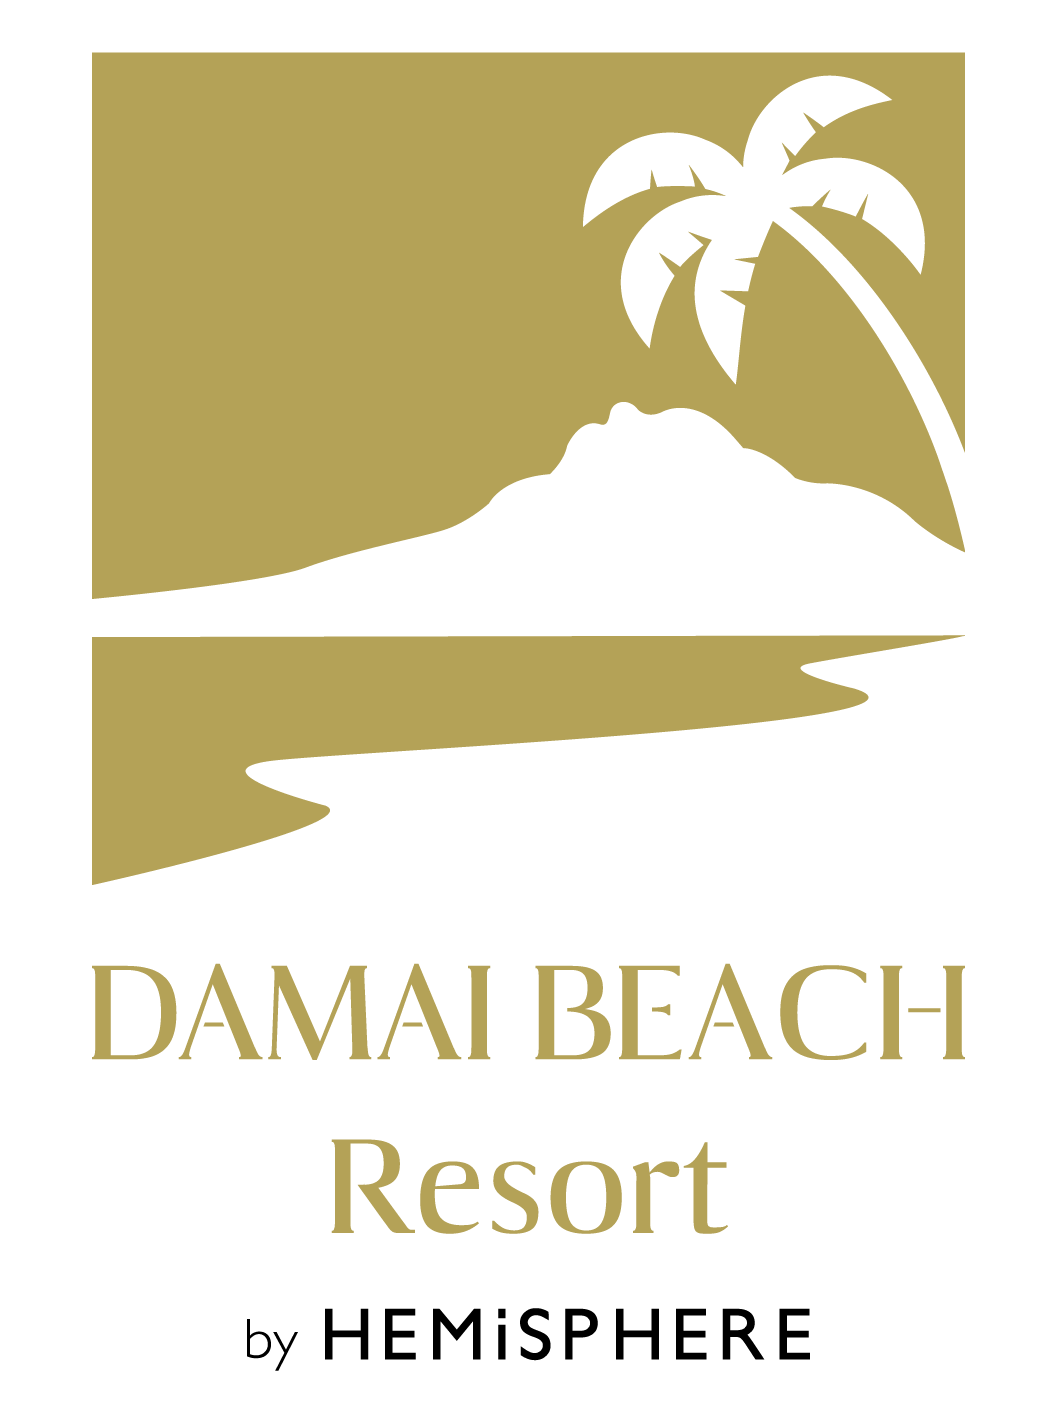 Desaru damai beach resort